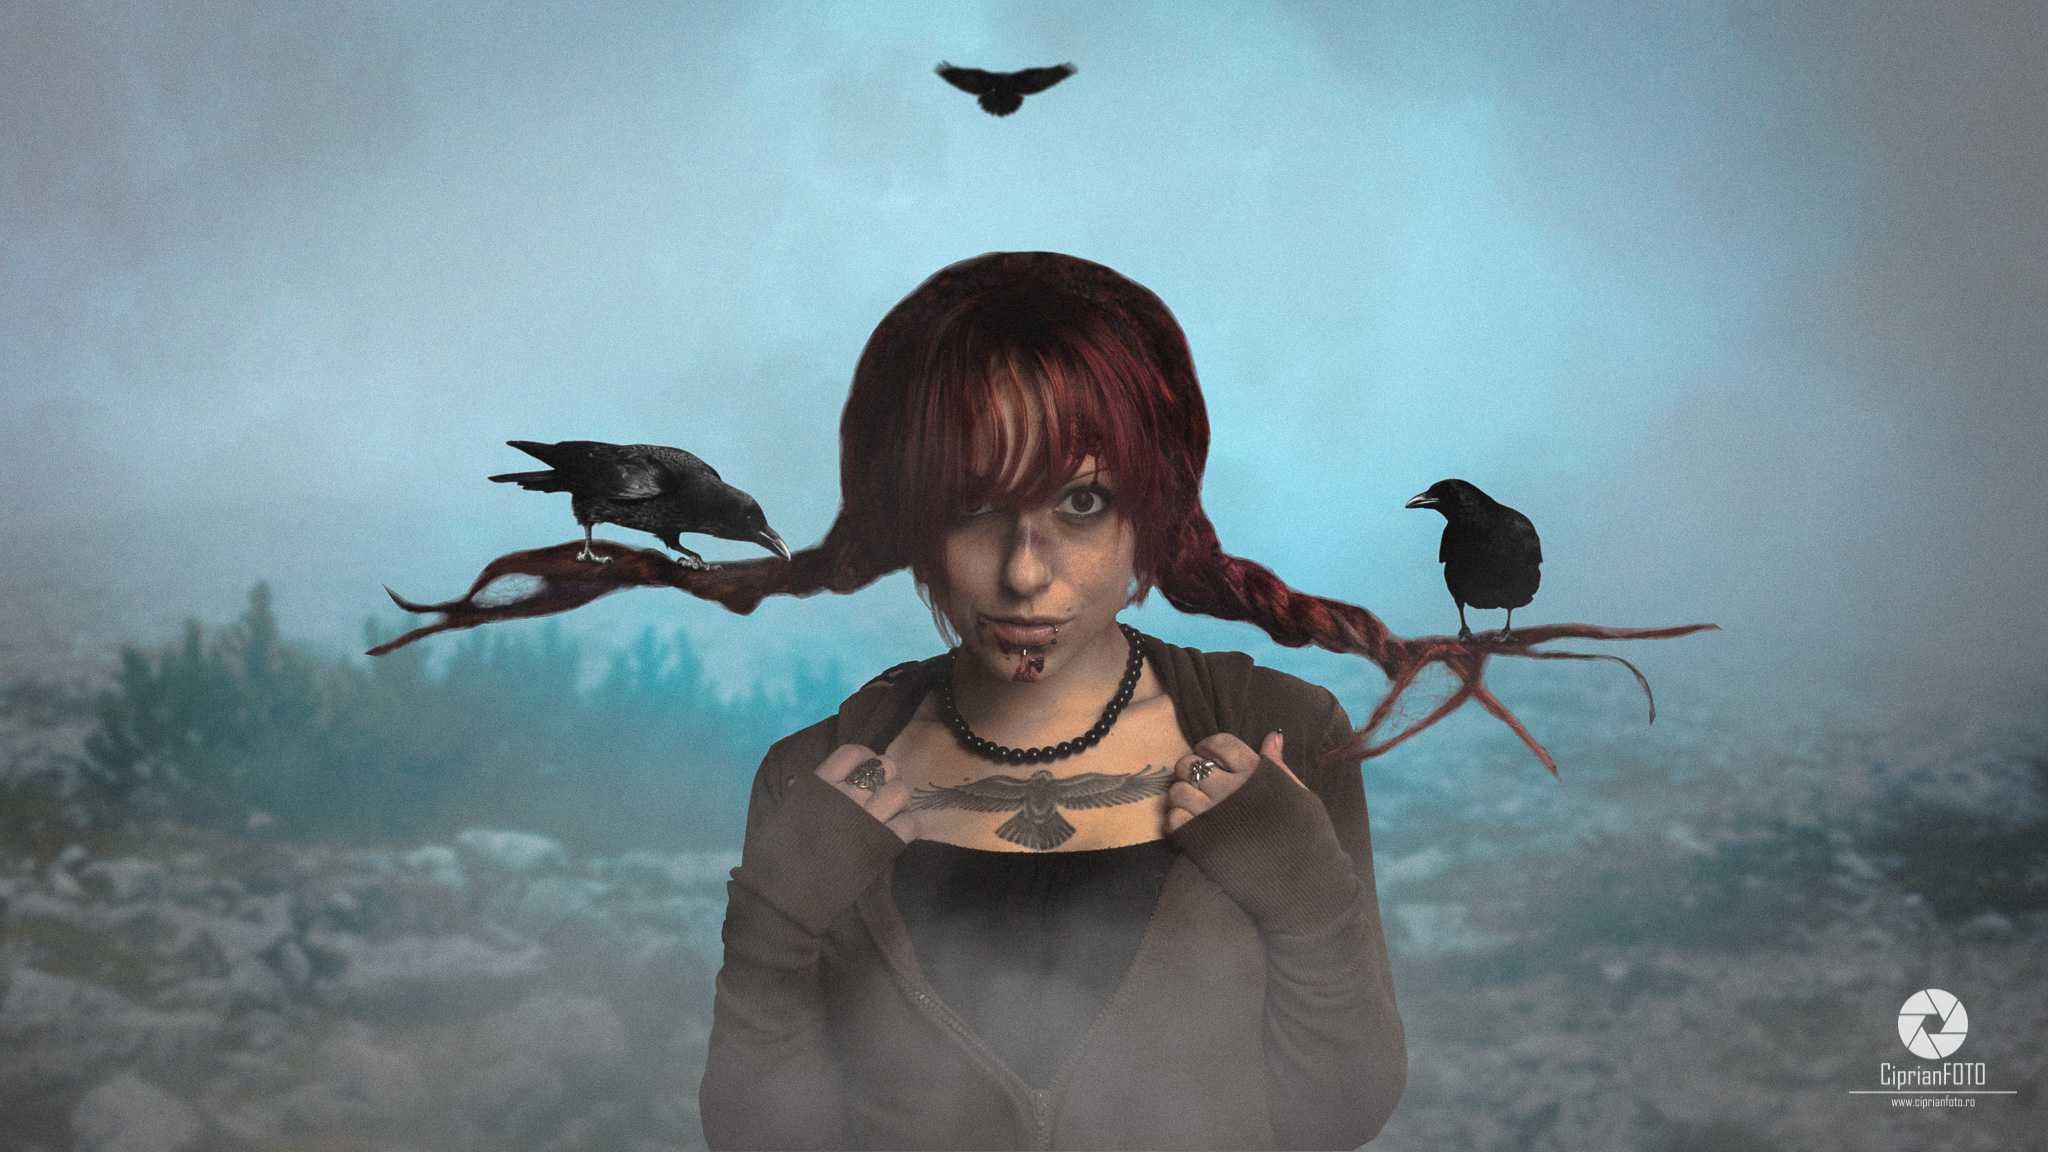 The Girl And Birds, Photoshop Manipulation Tutorial, CiprianFOTO